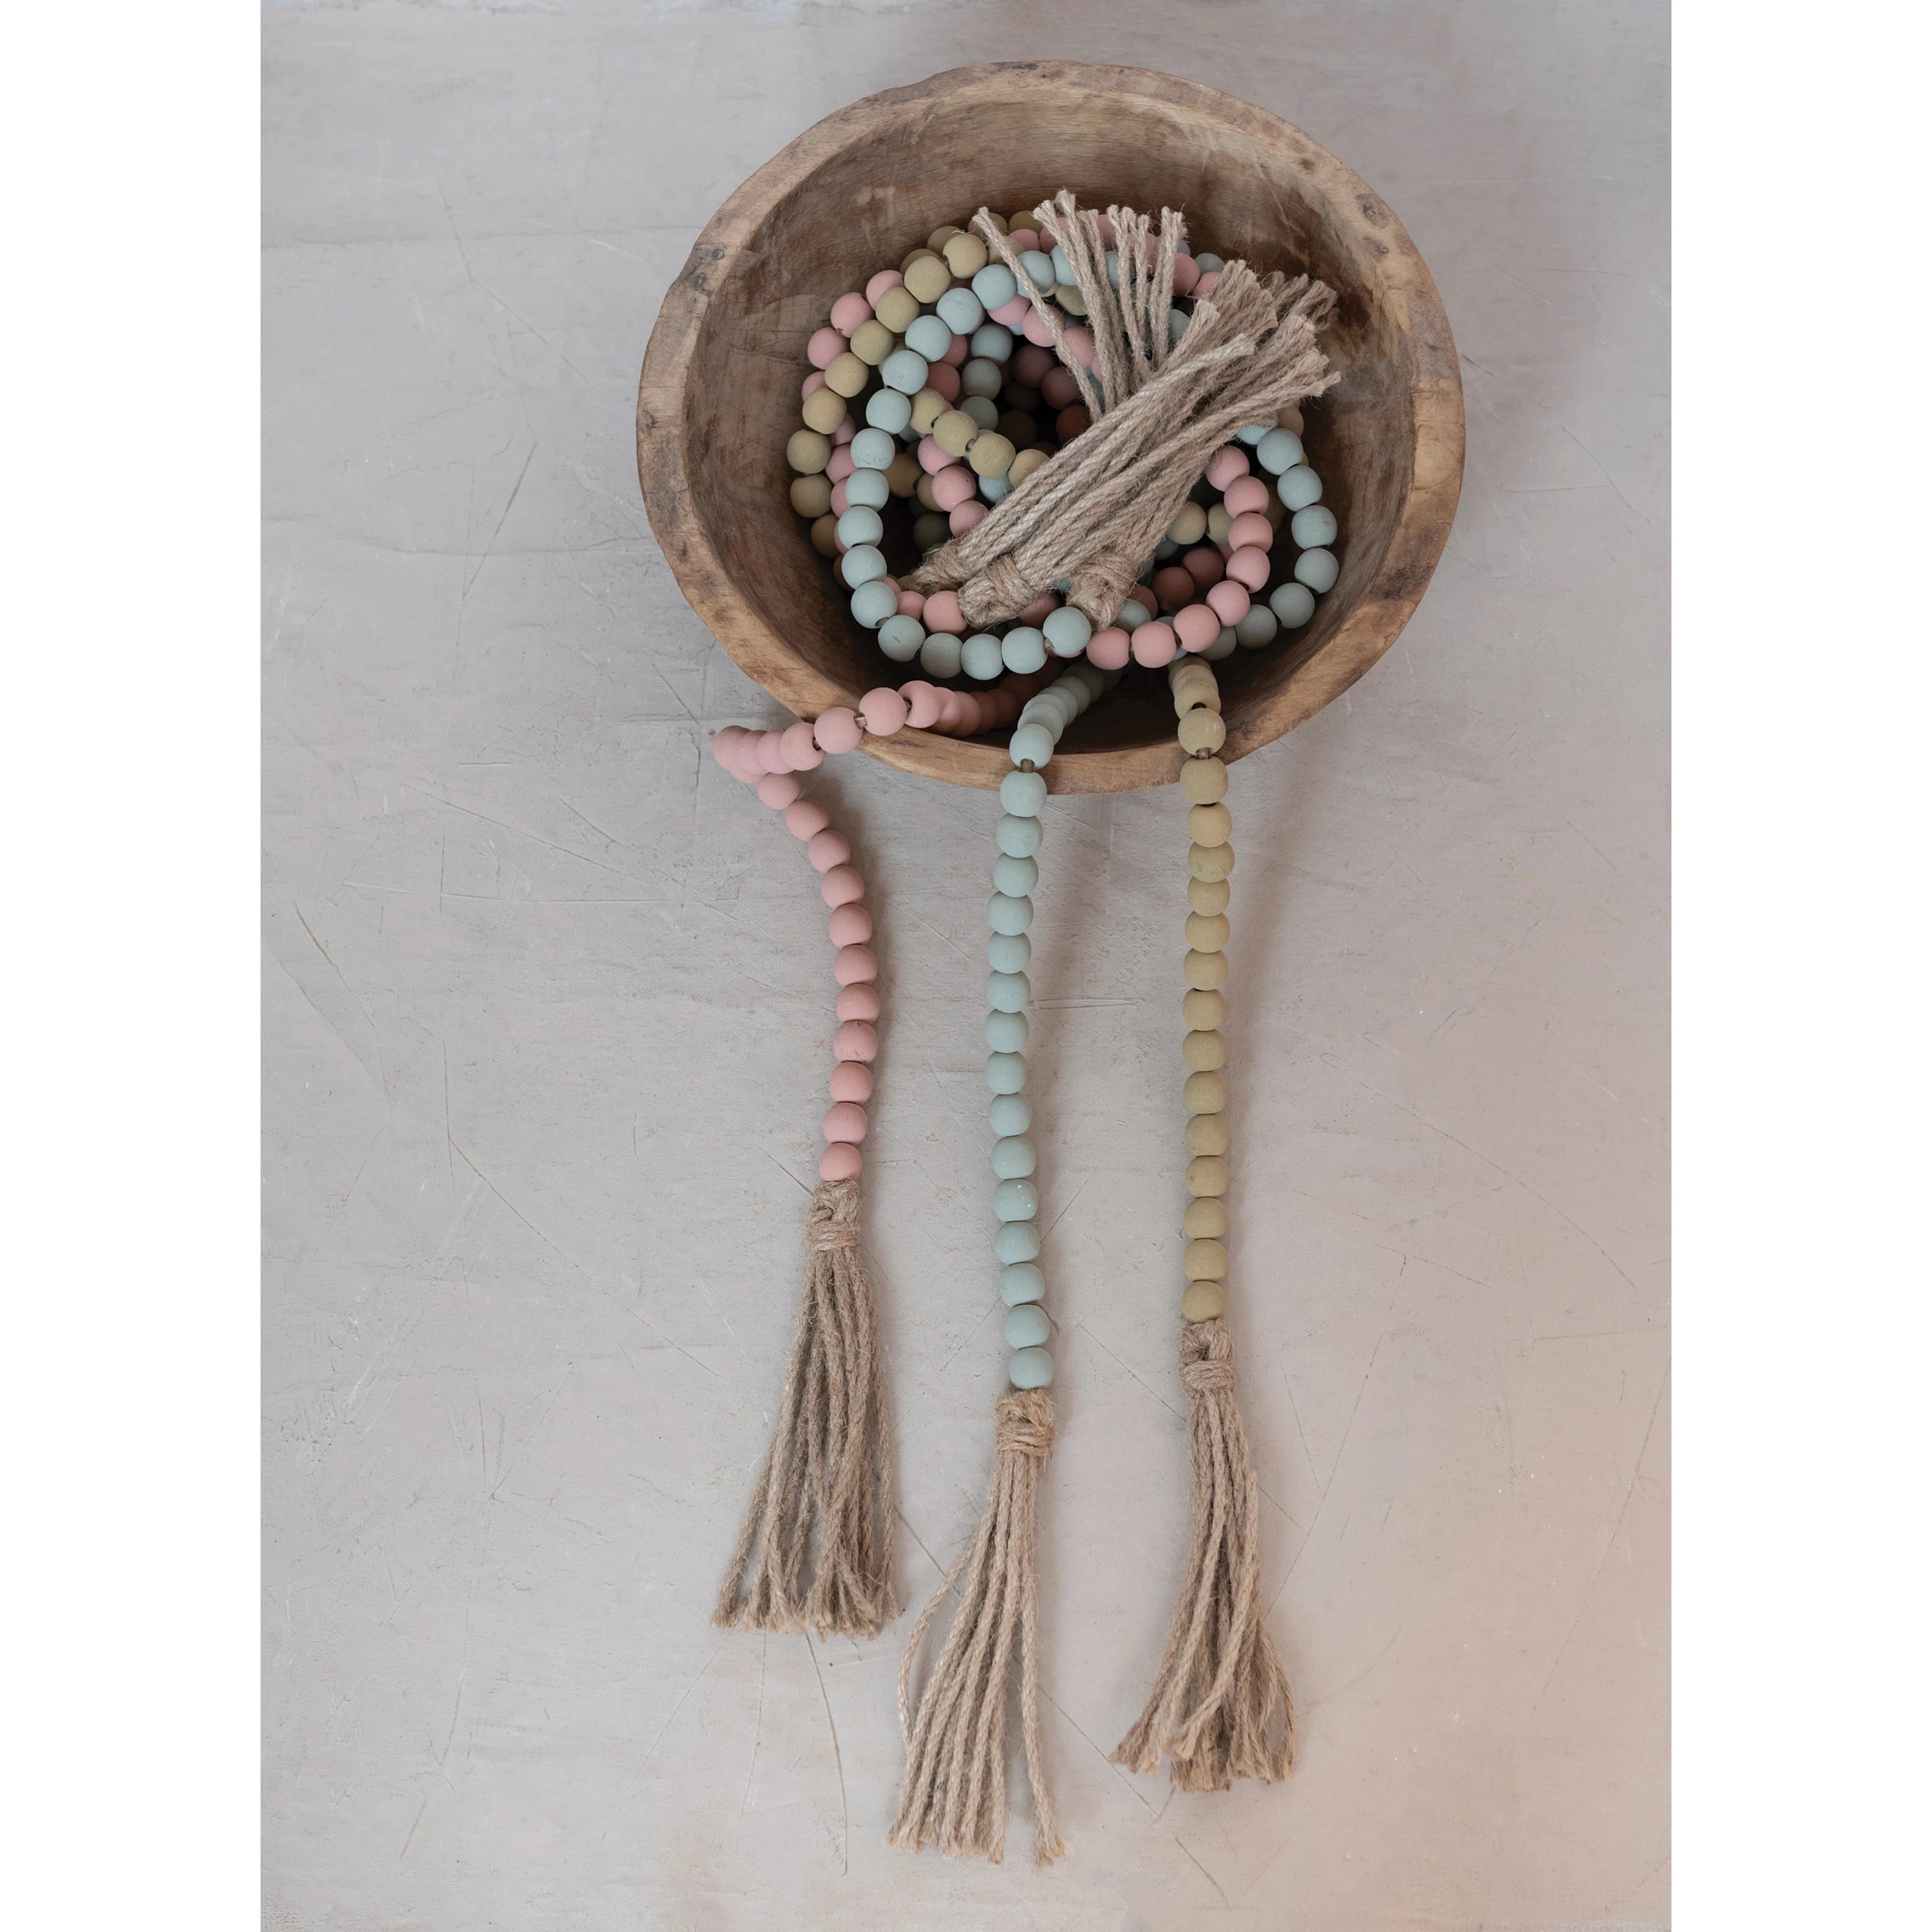 Paulownia Wood Bead with Jute Tassels, Color Options